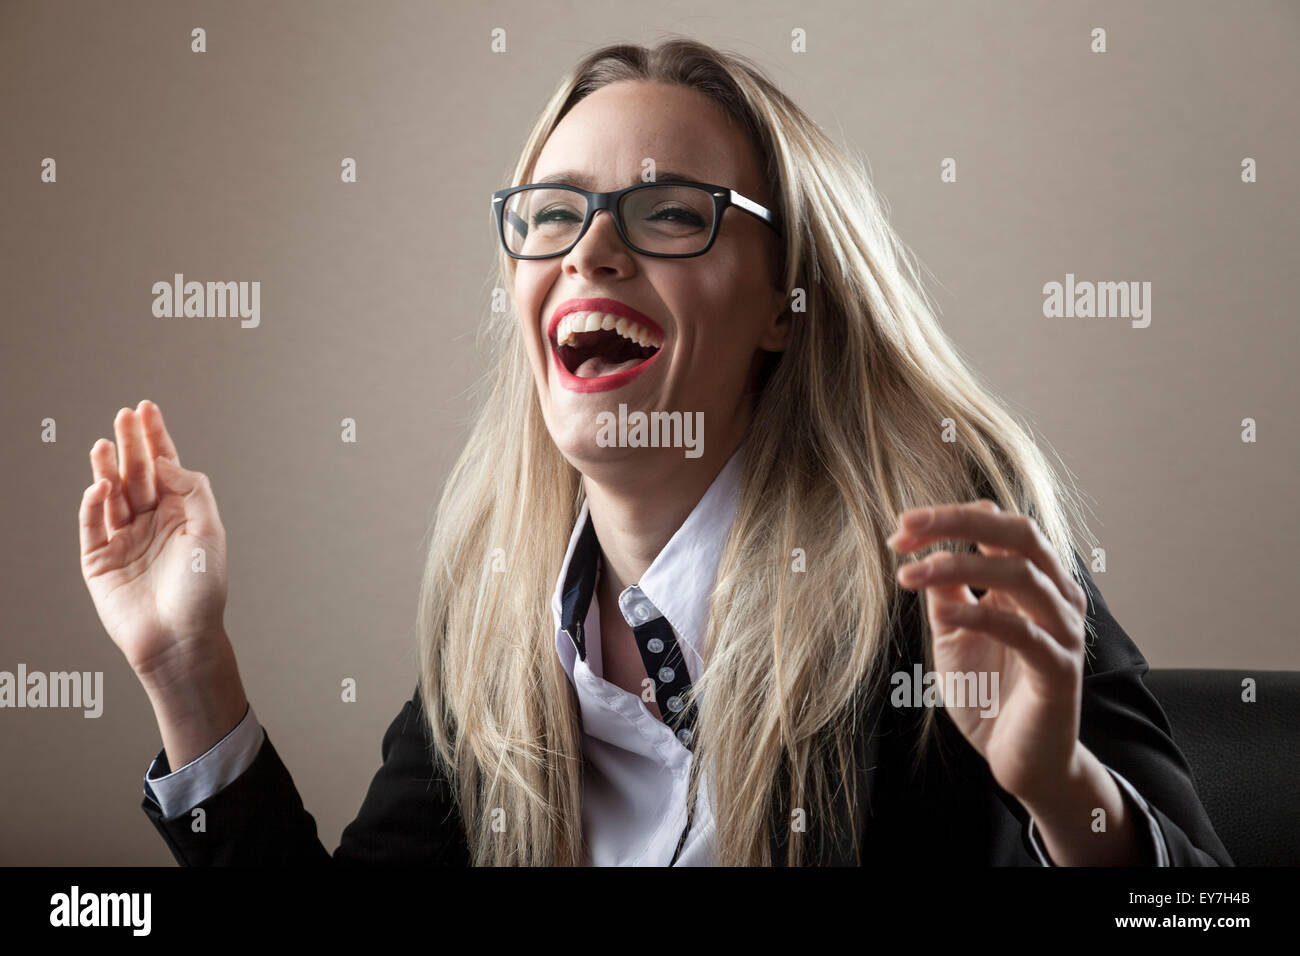 Businesswoman laughing cheerfully Stock Photo